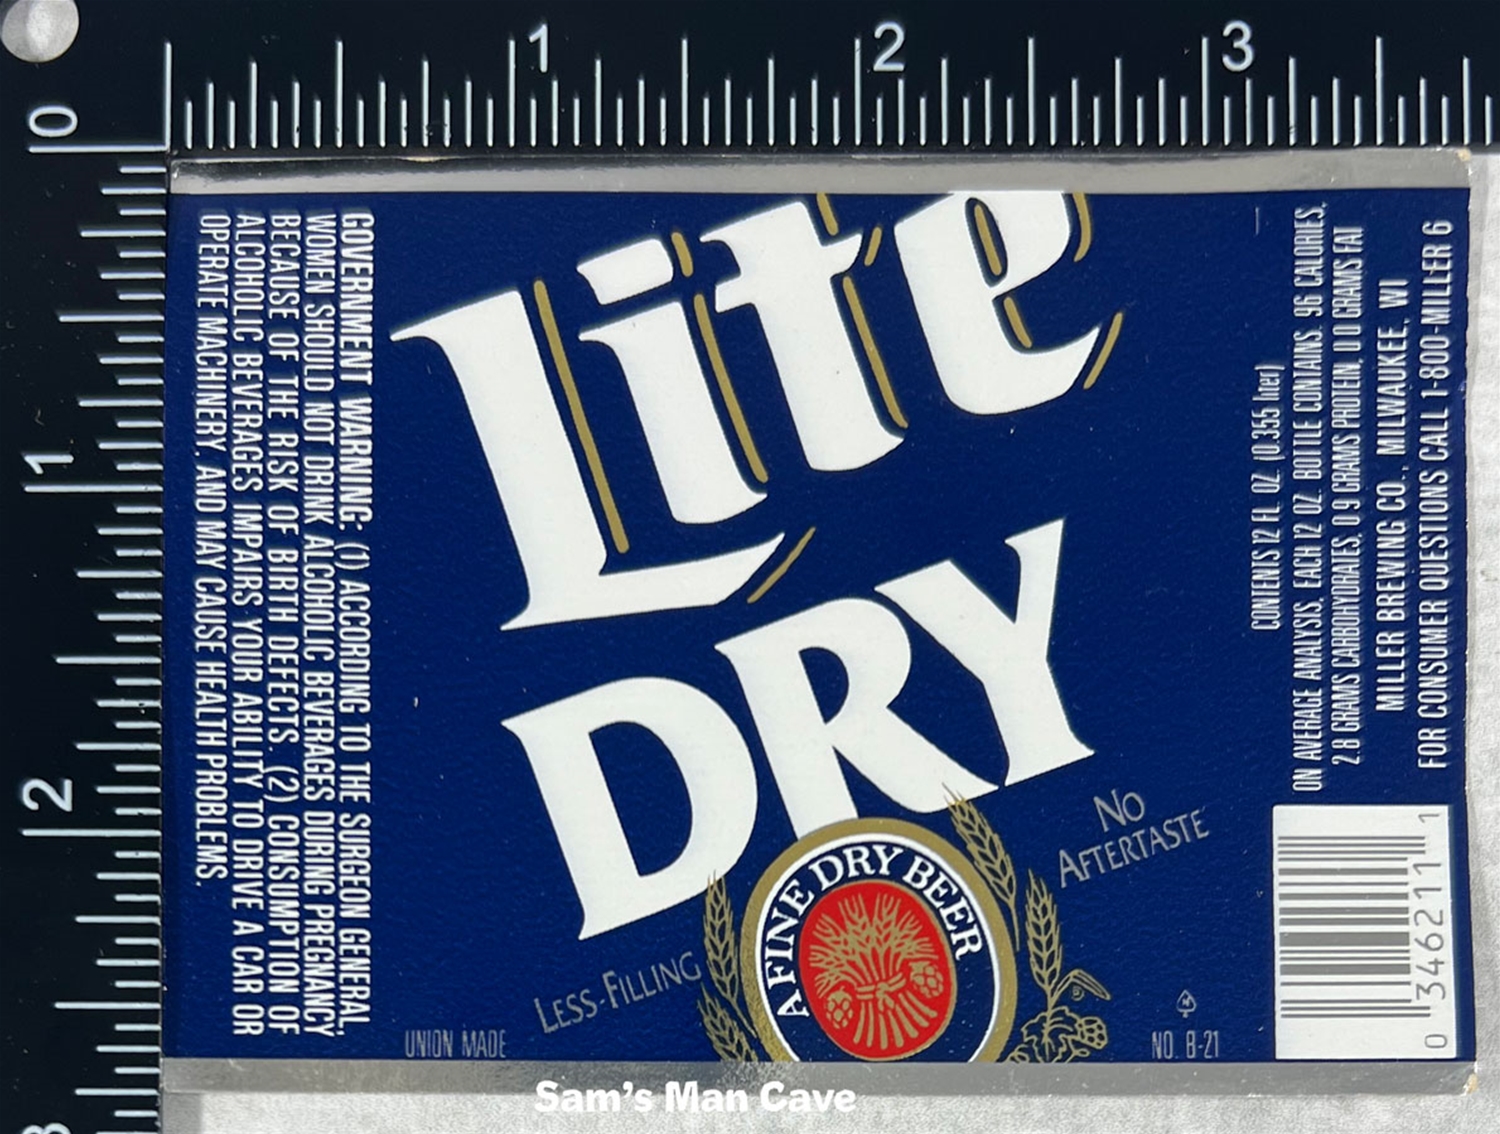 Lite Dry Beer Label